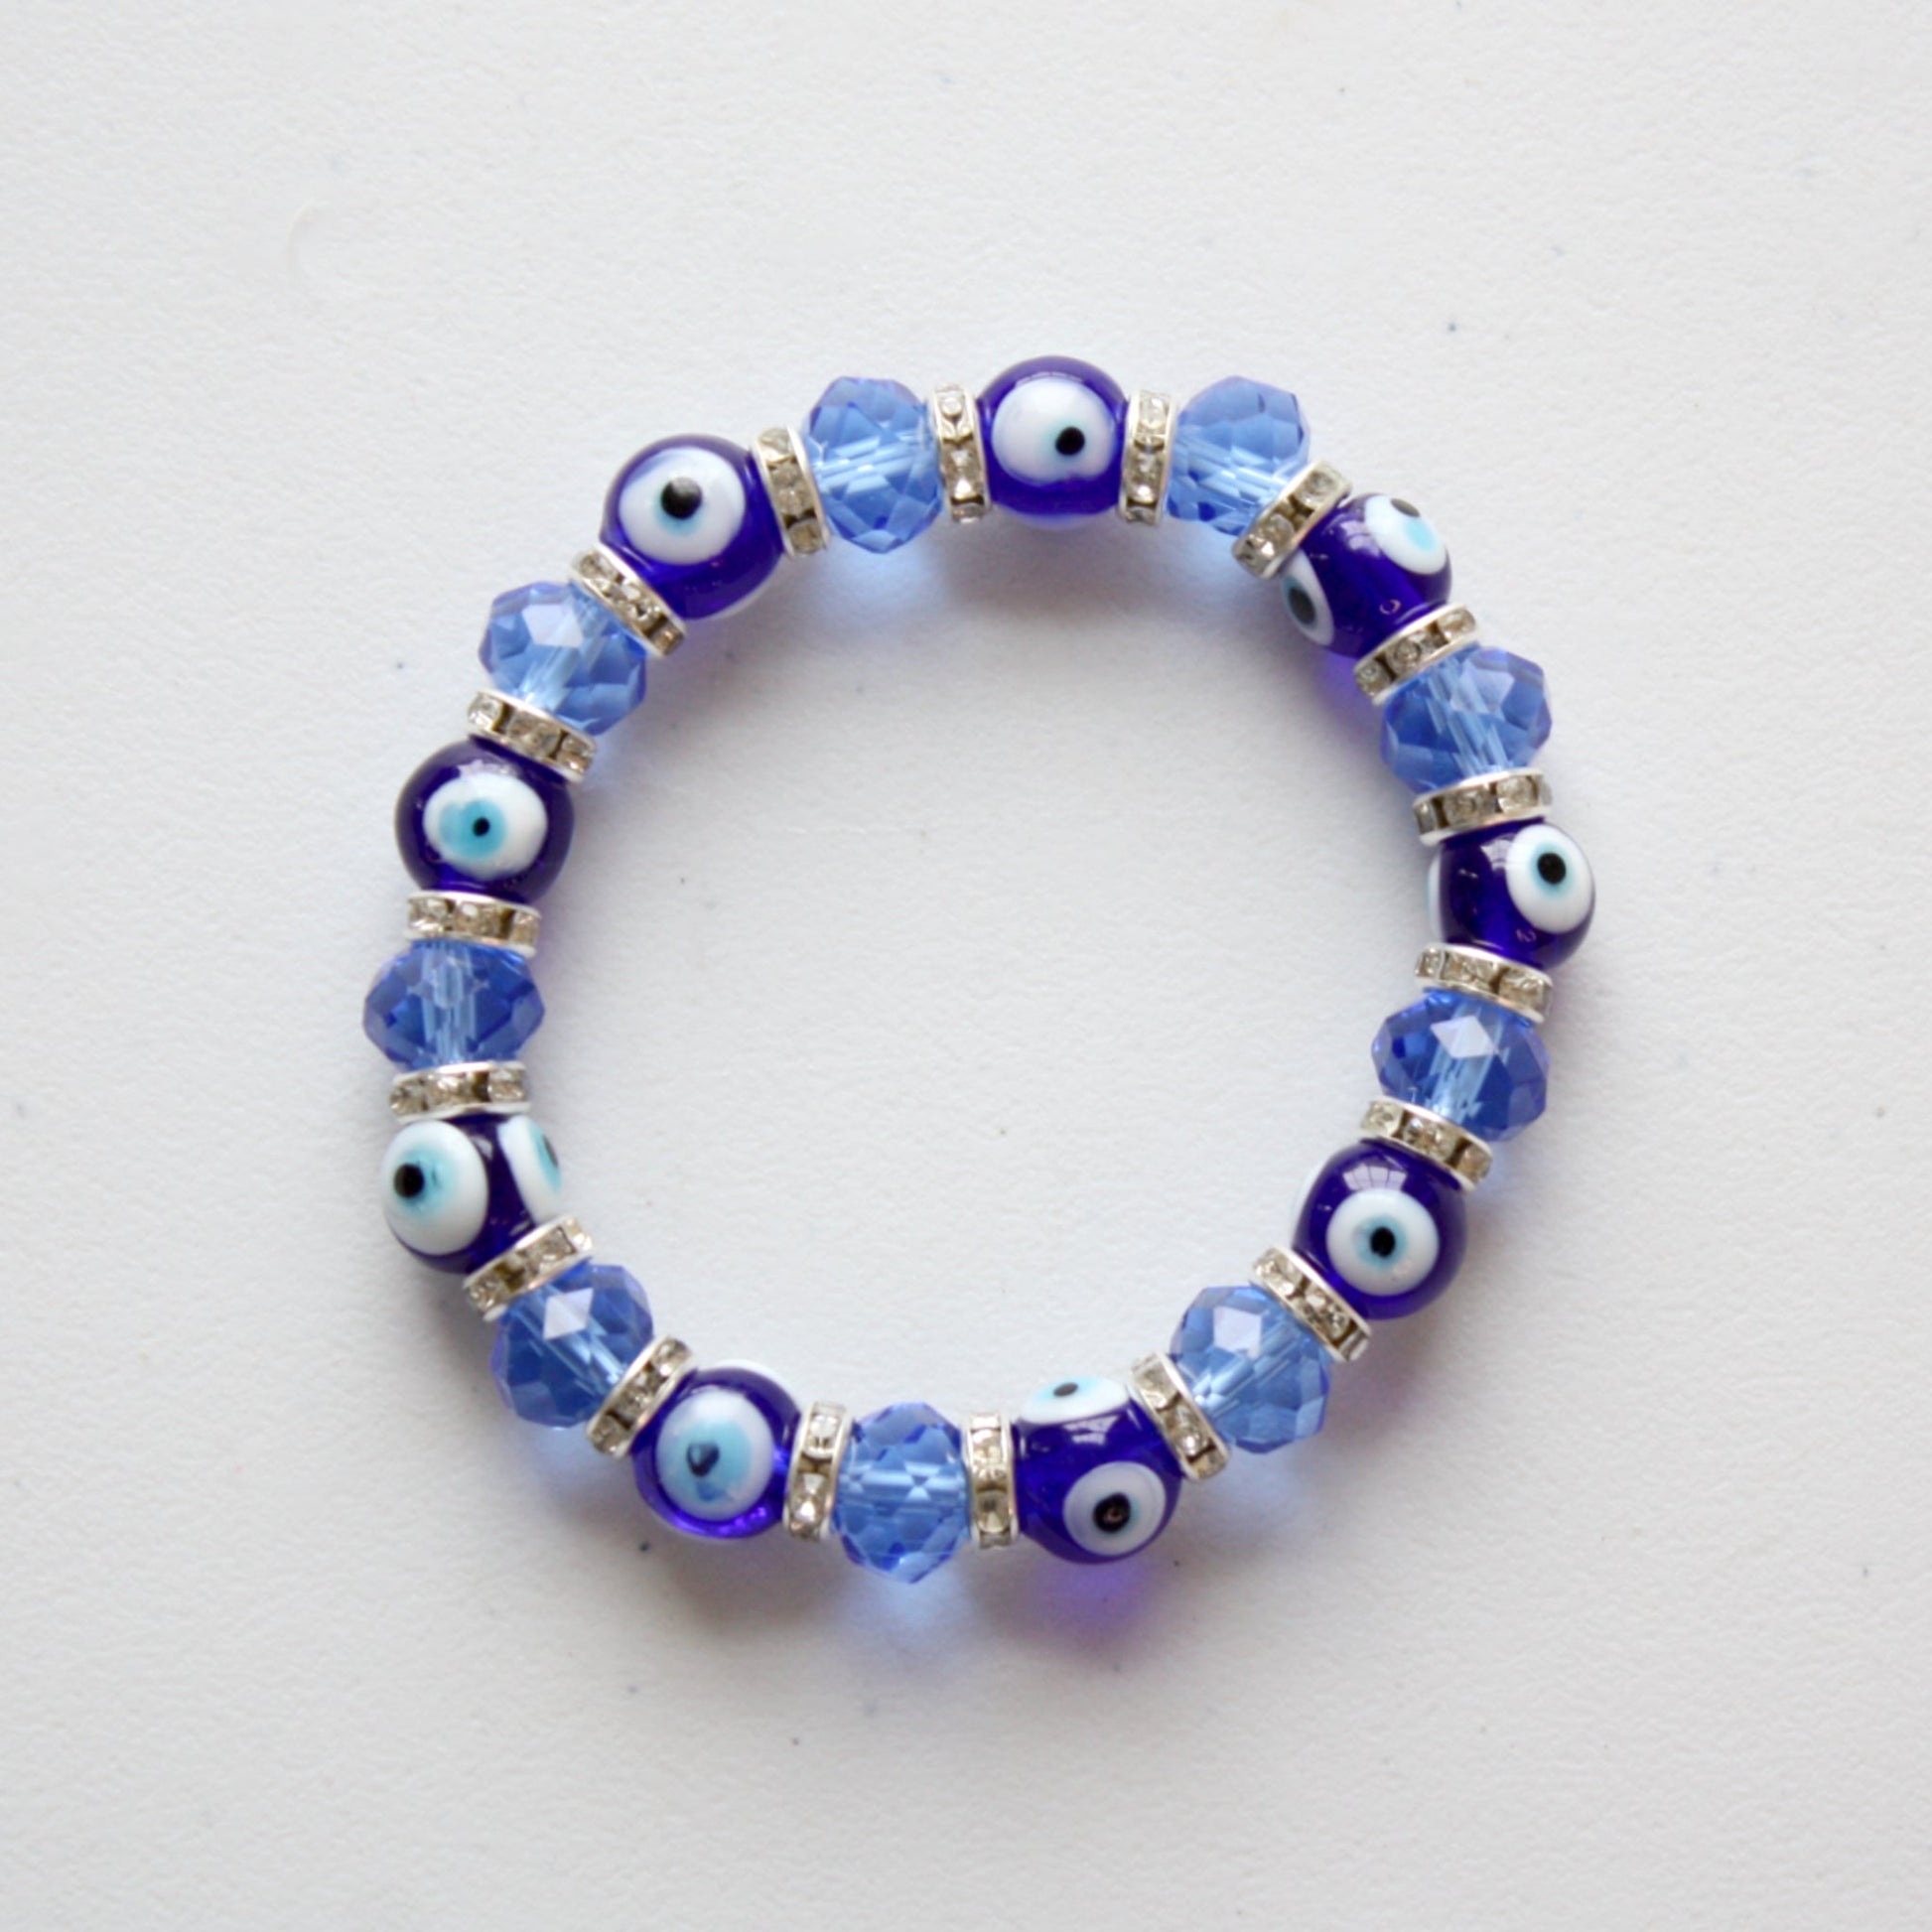 Evil Eye Crystal Stone Boho Bead Bracelet - Made in the USA